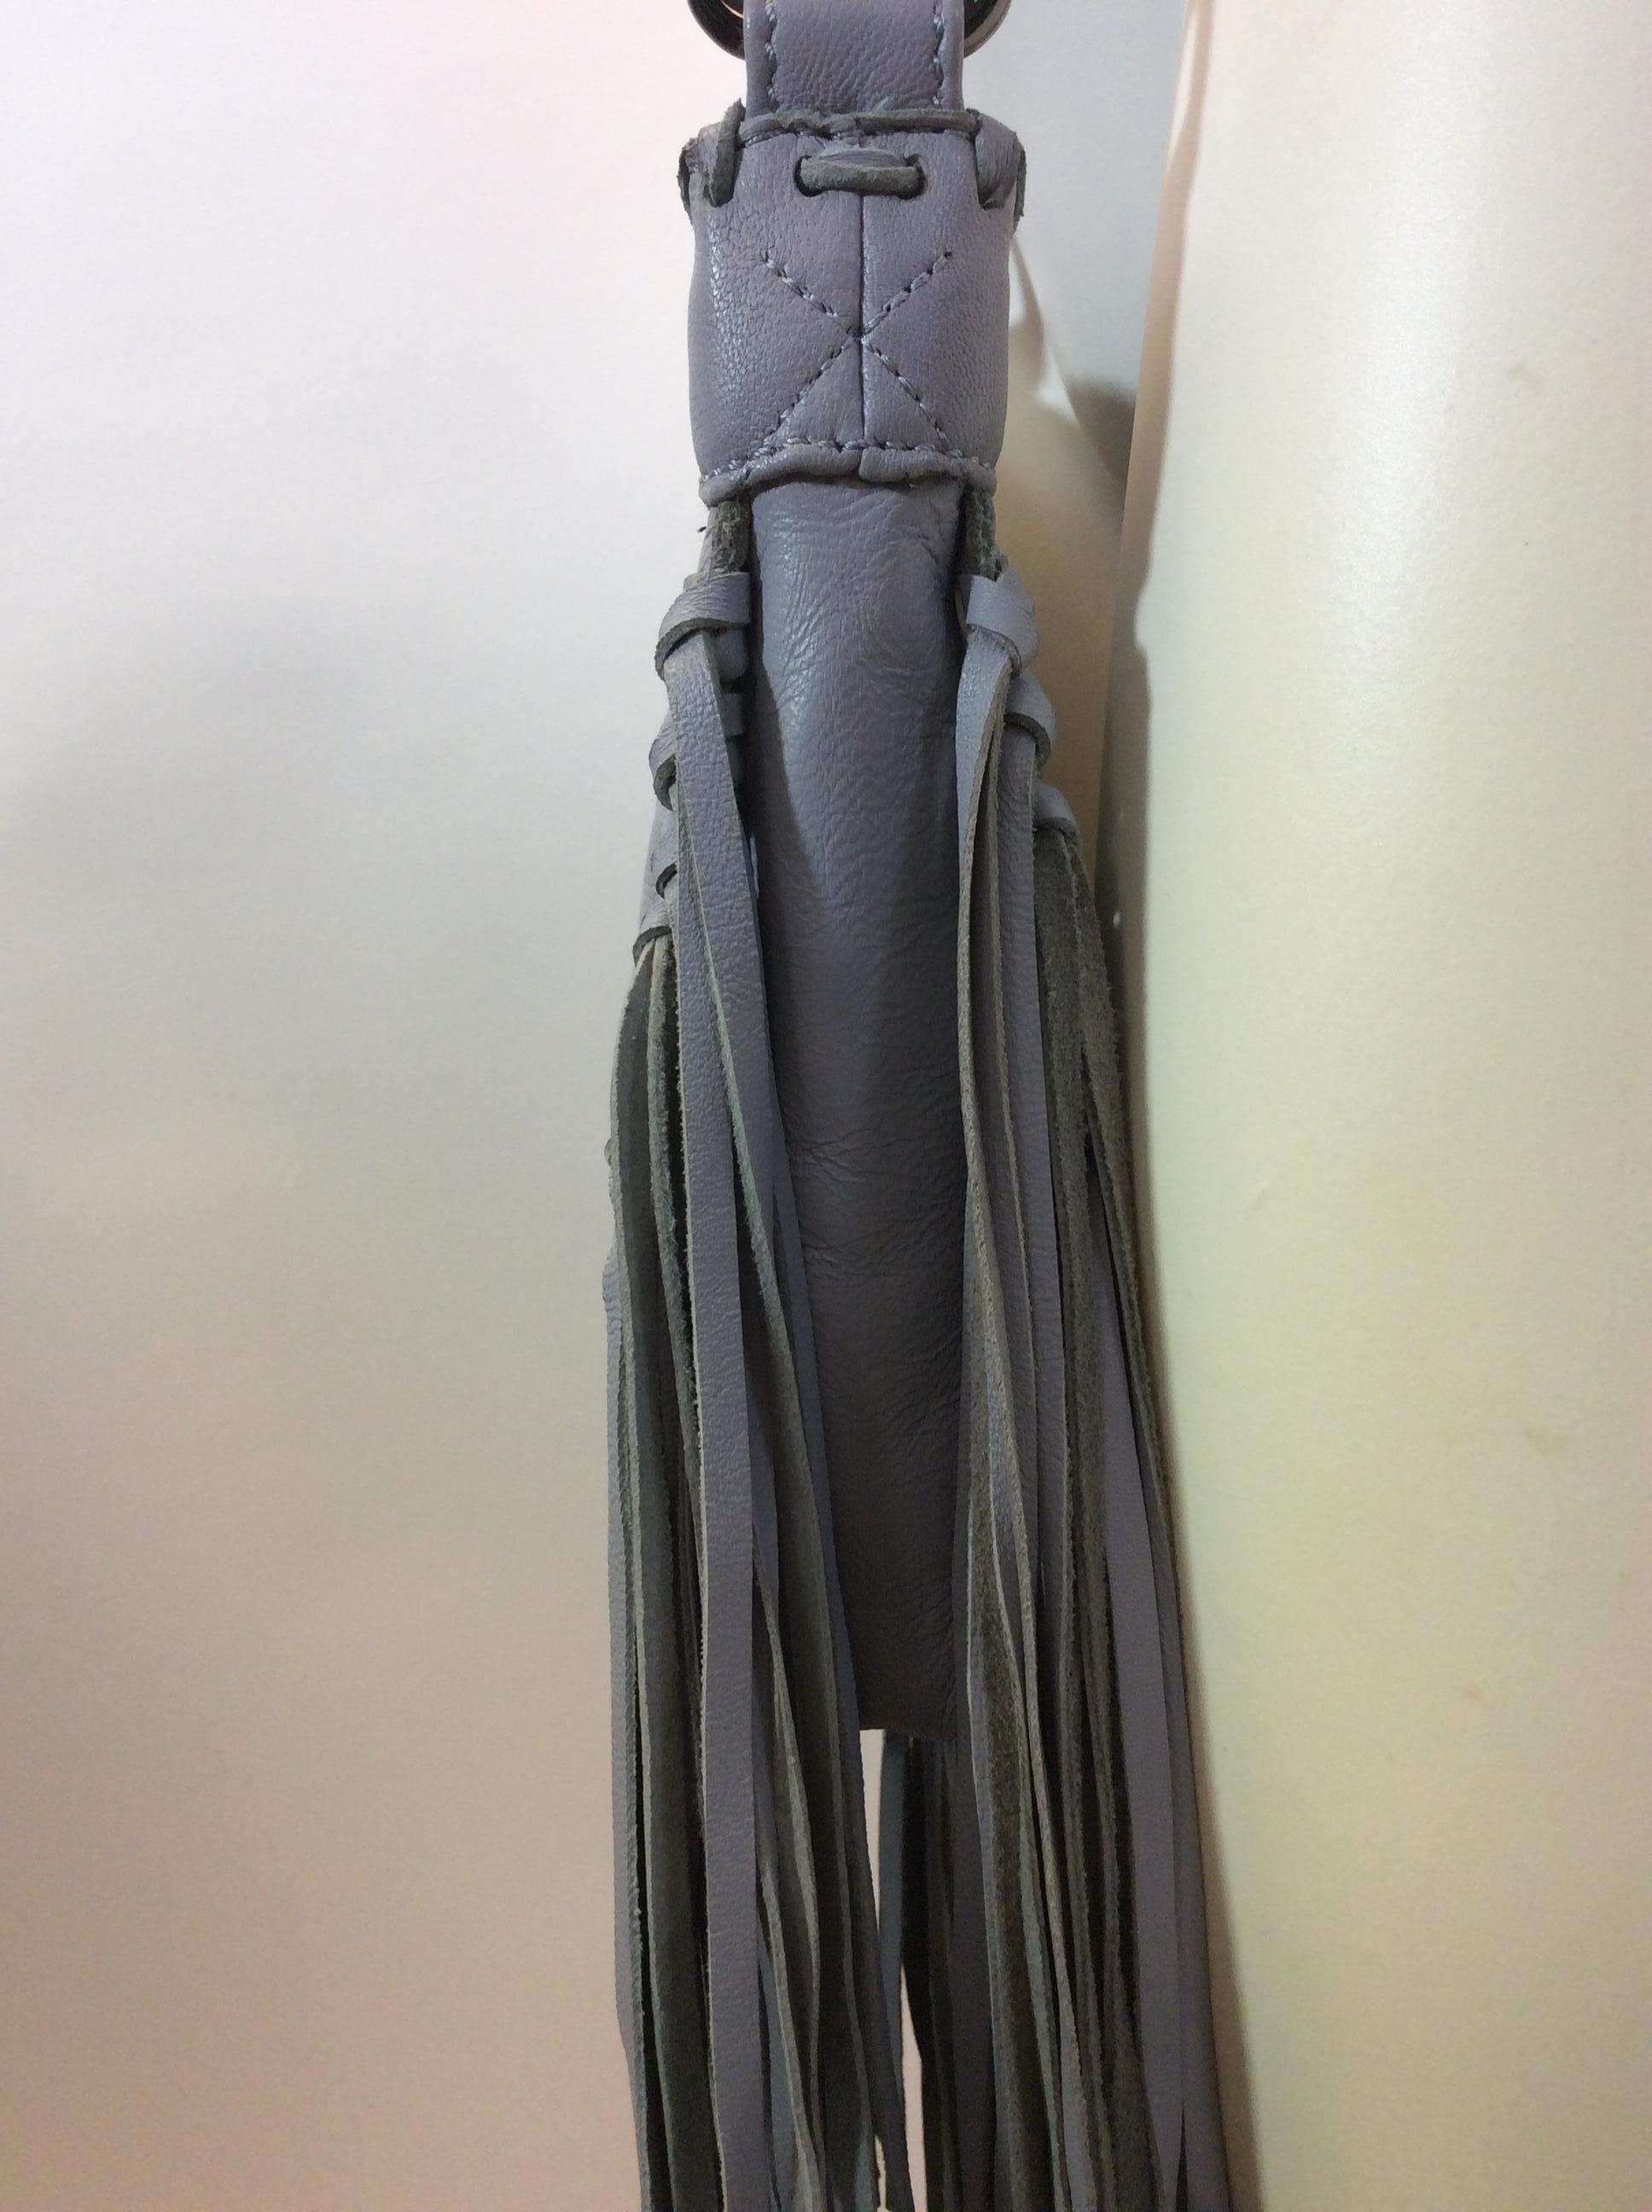 Thomas Wylde Gray Leather Fringe Crossbody NWT
$250
Made in China
Leather
5.5